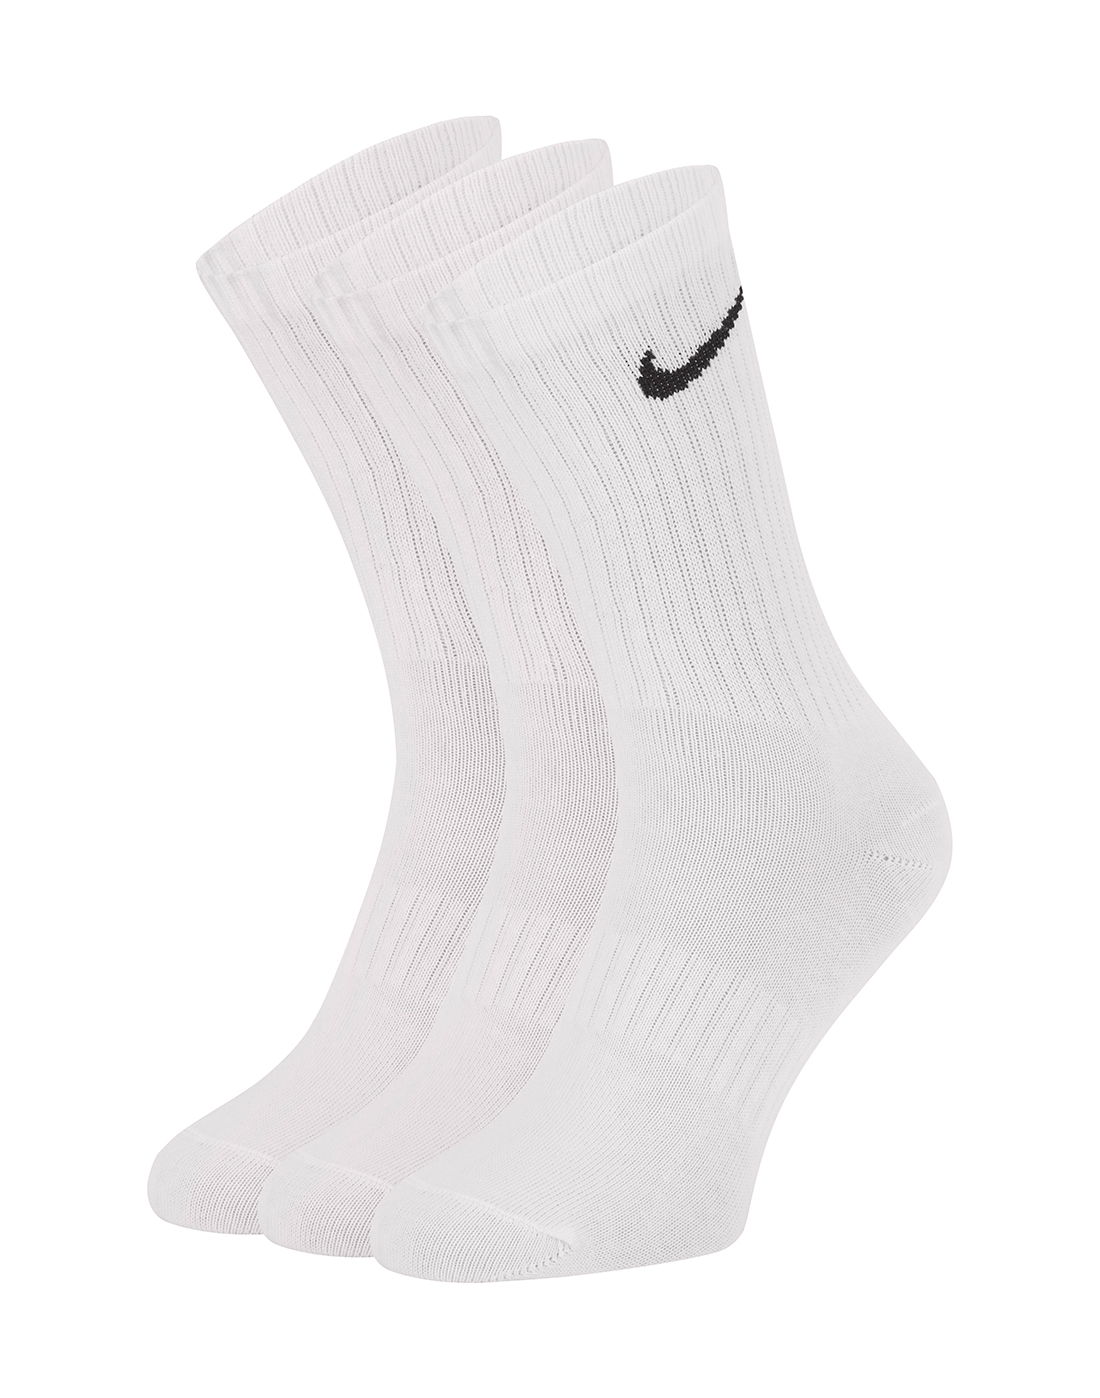 one pair of white nike socks